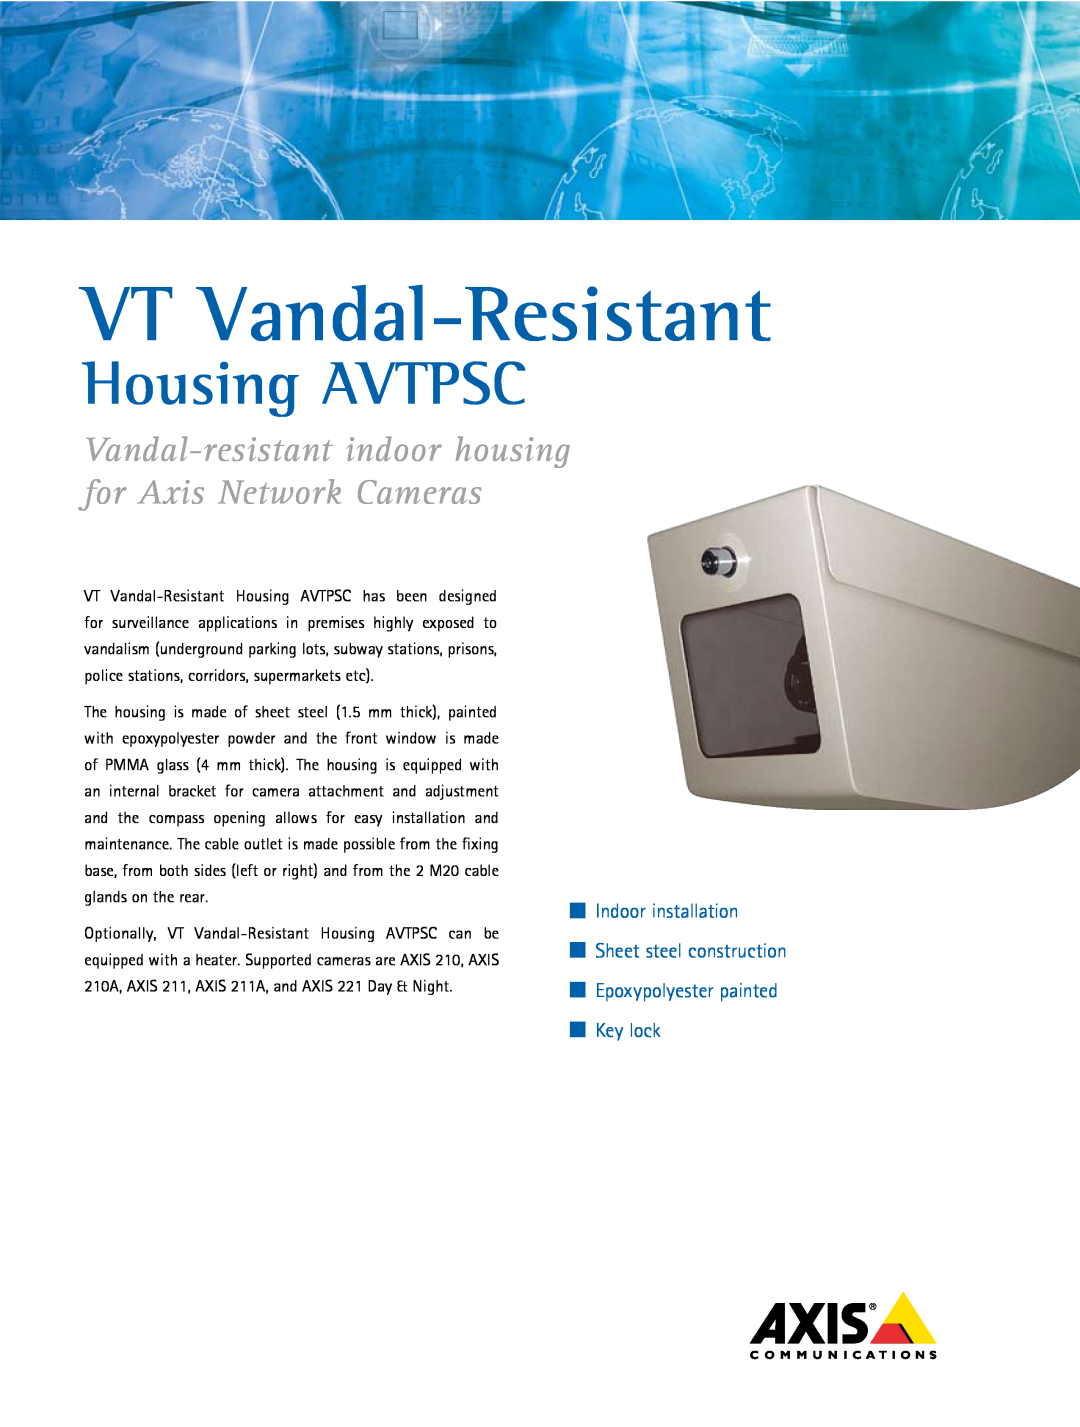 Axis Communications manual VT Vandal-Resistant, Housing AVTPSC,  Indoor installation 